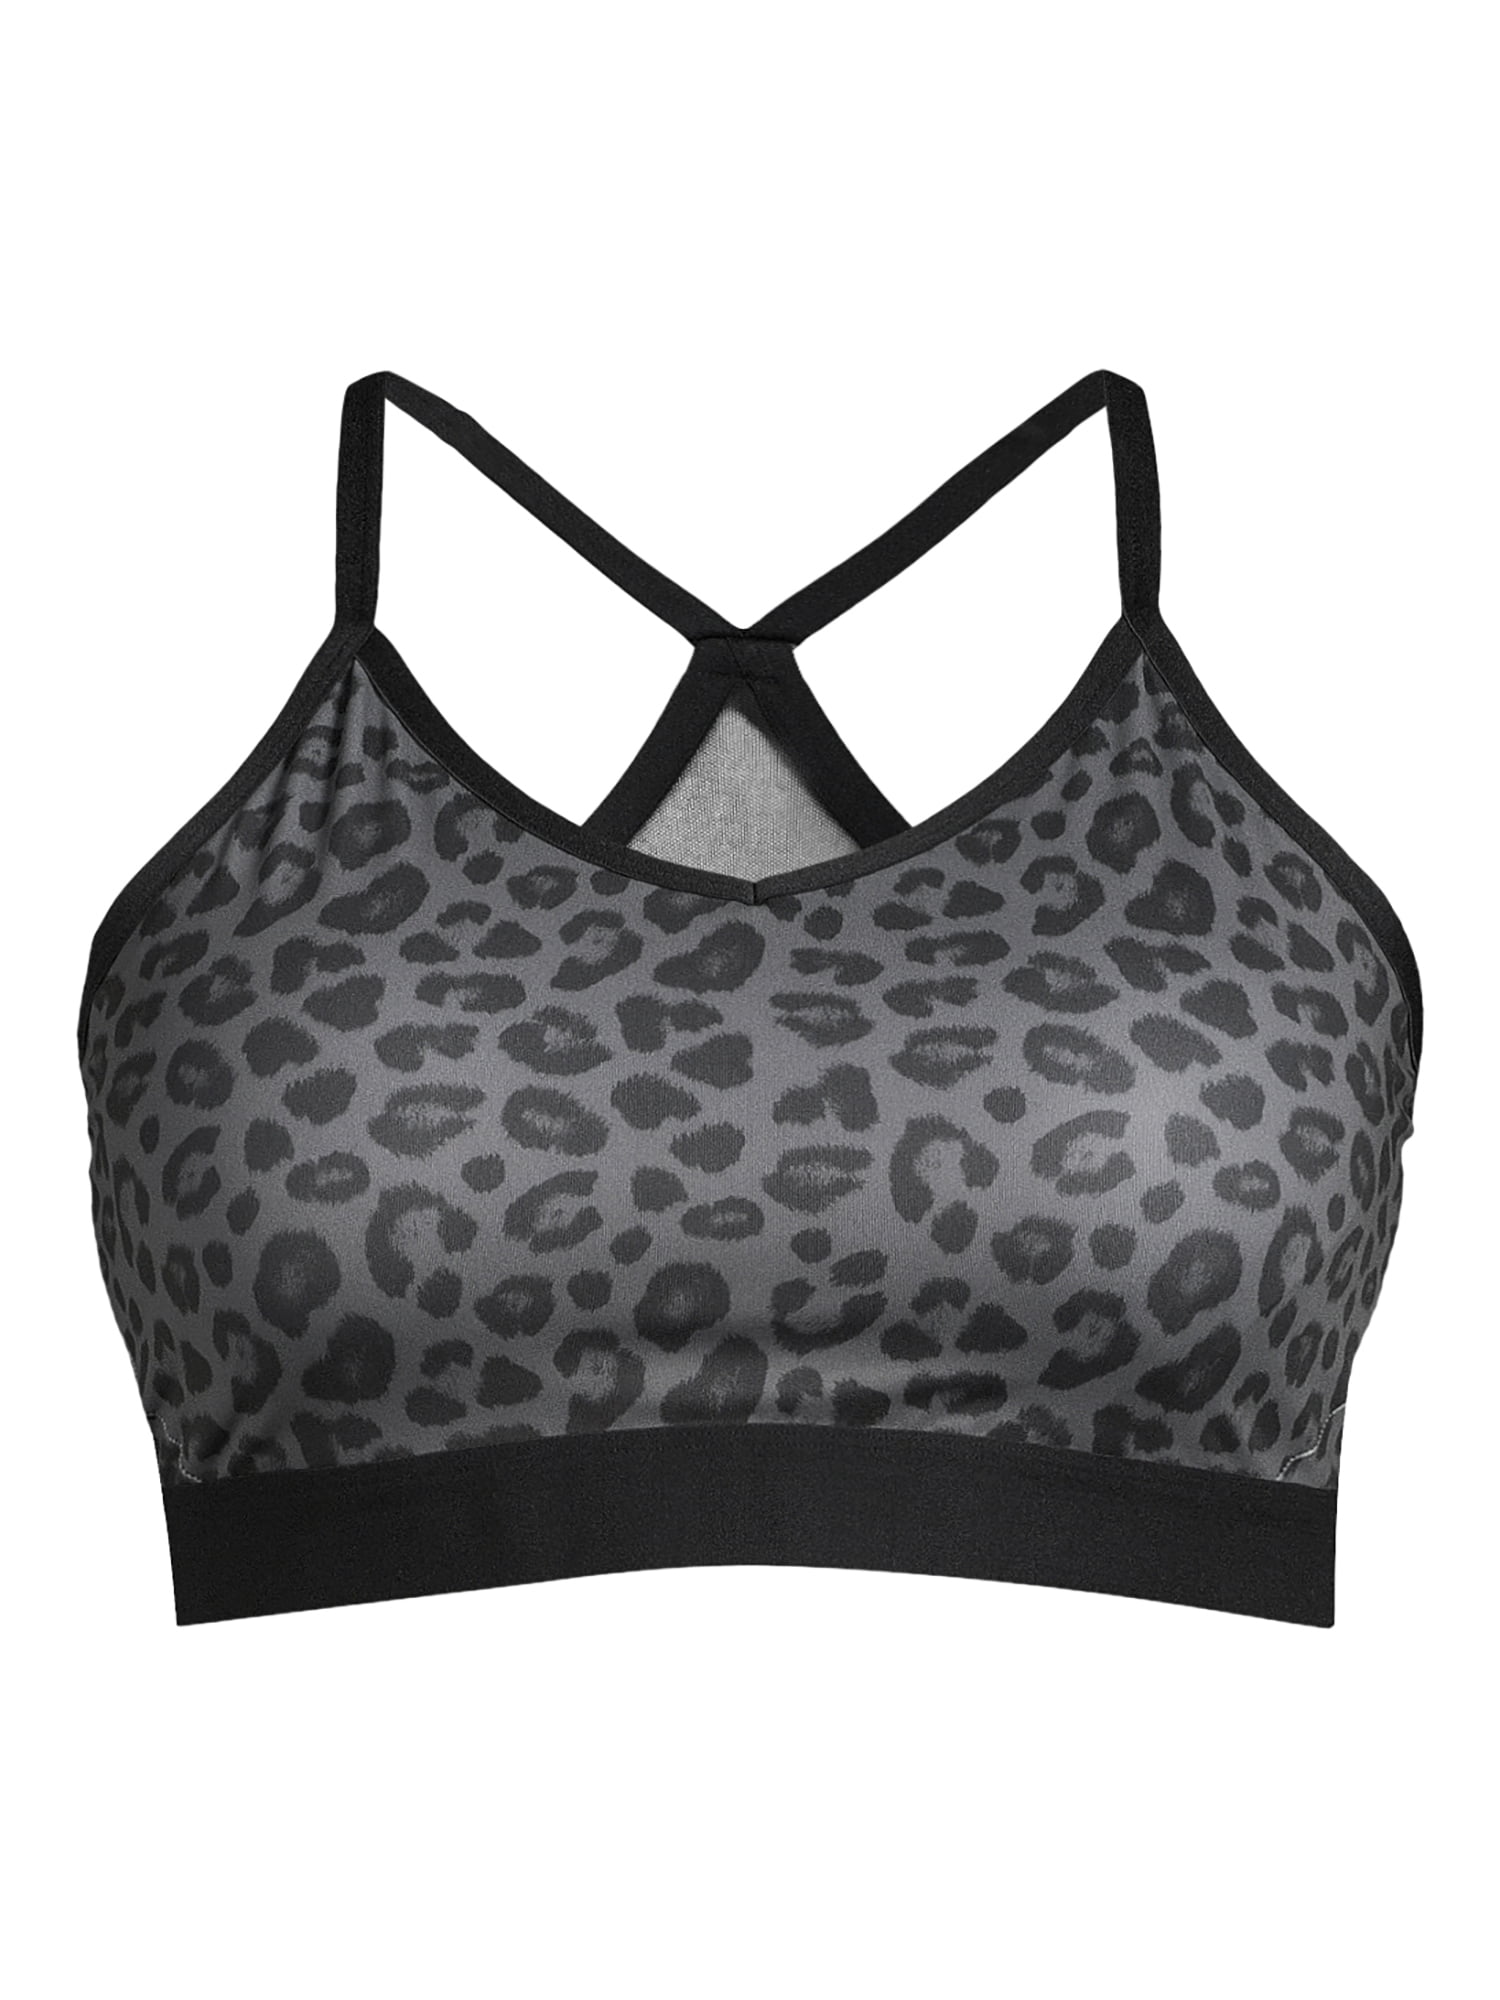 Athletic Works Women's Plus Size V-Neck Racerback Leopard Print